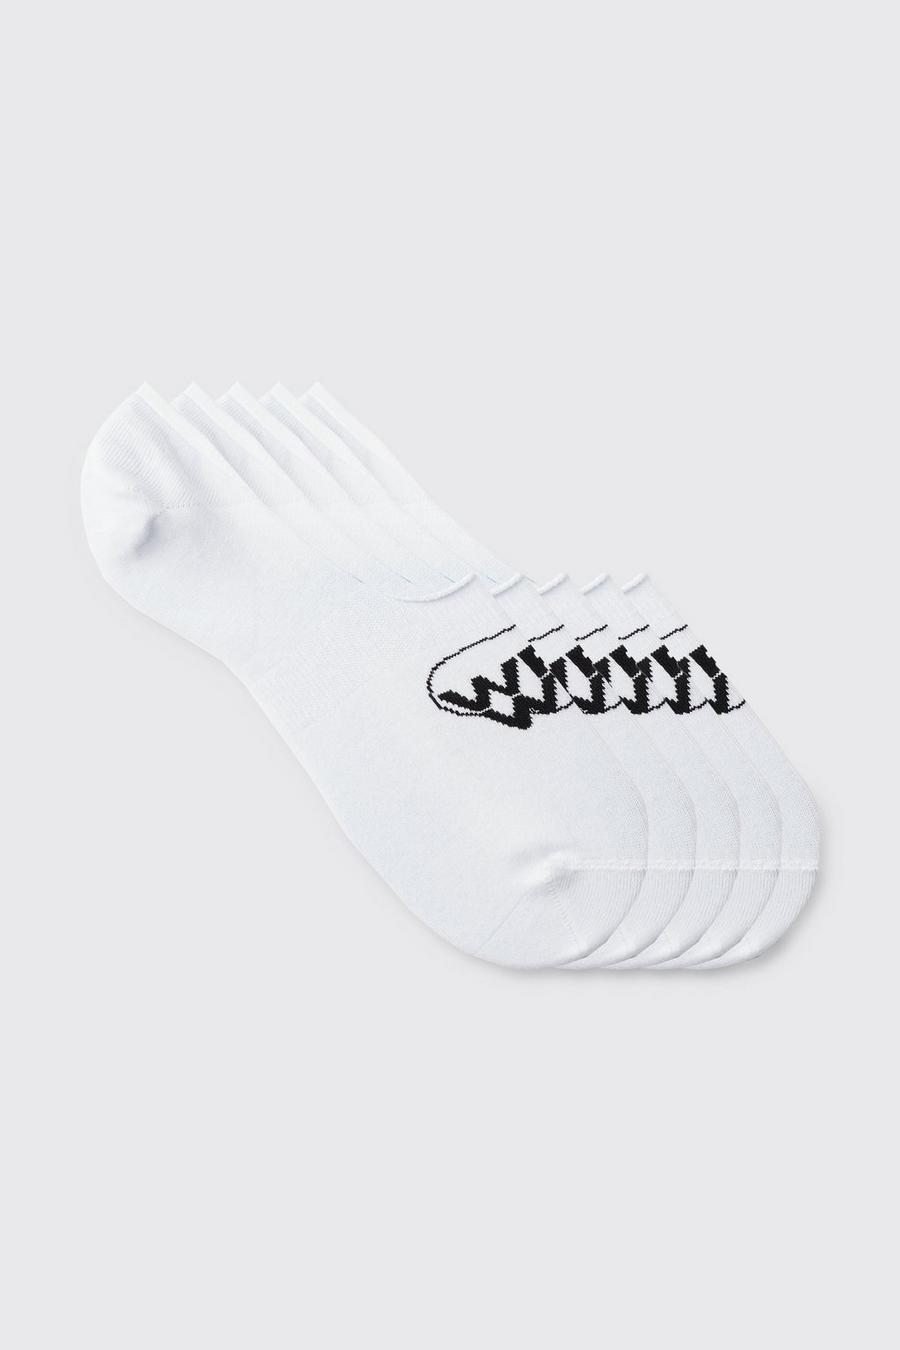 Pack de 5 pares de calcetines invisibles con logo Worldwide, White image number 1